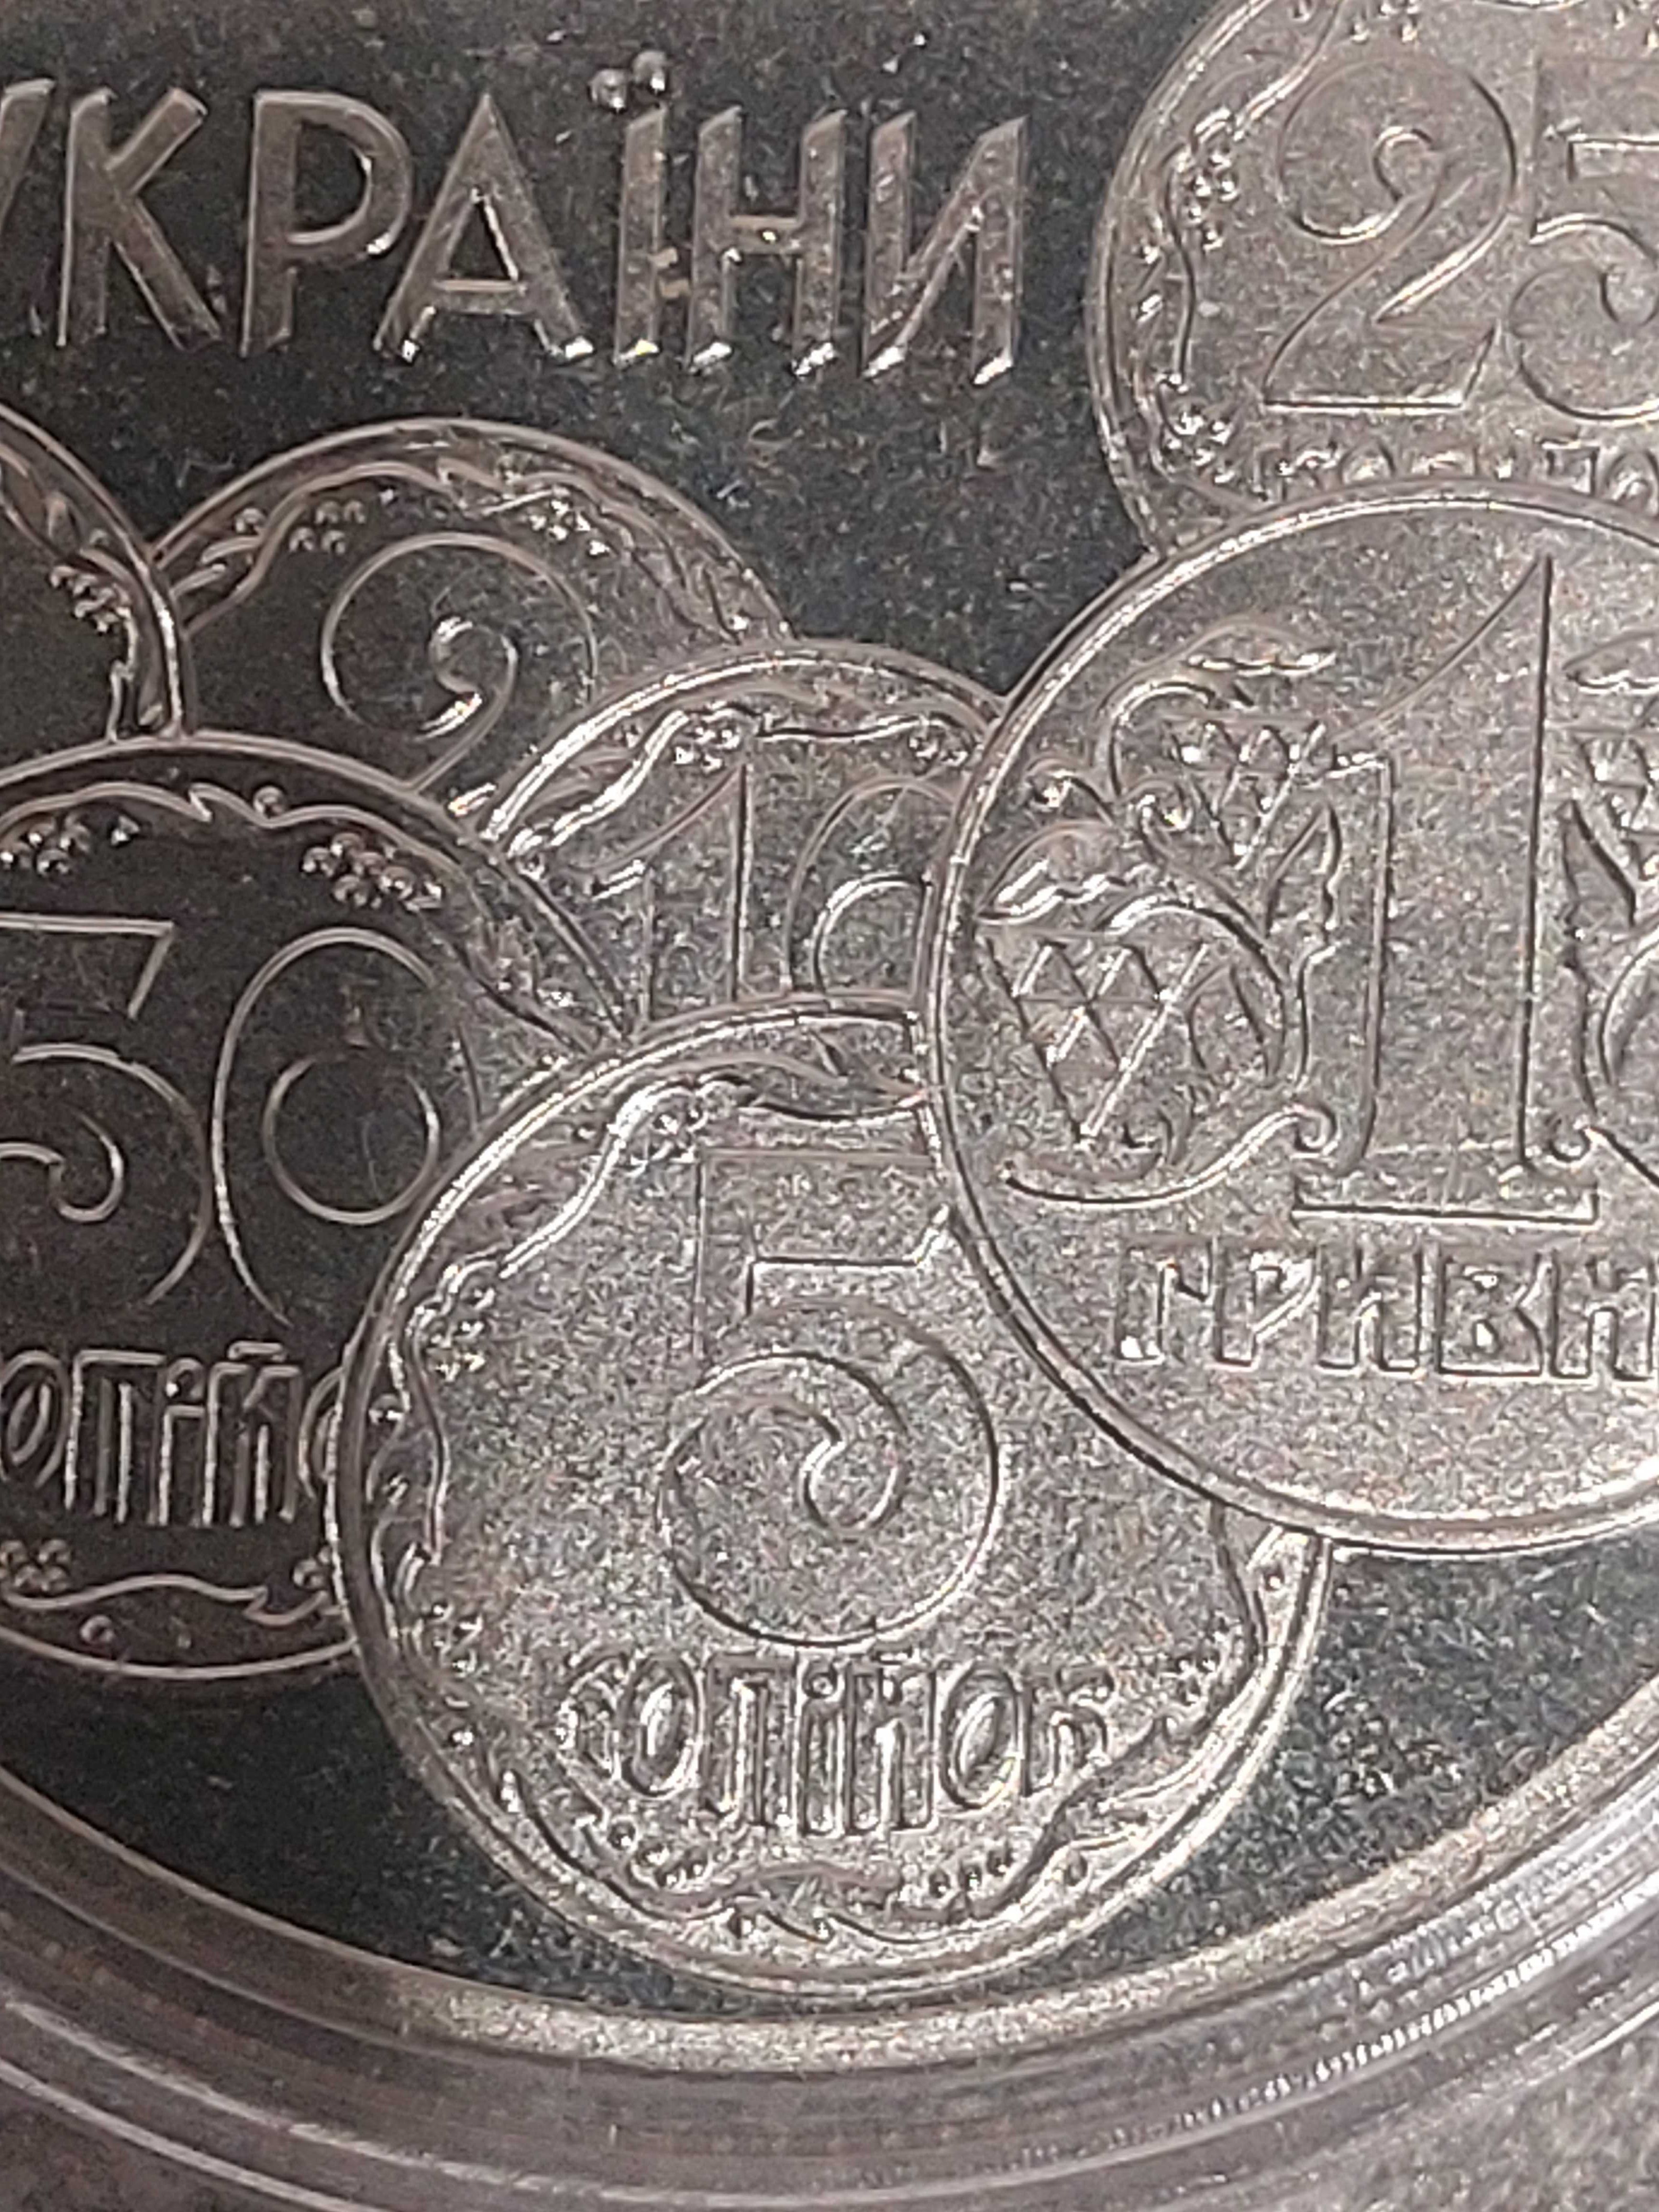 2 гривны 1996 г. Монеты Украины